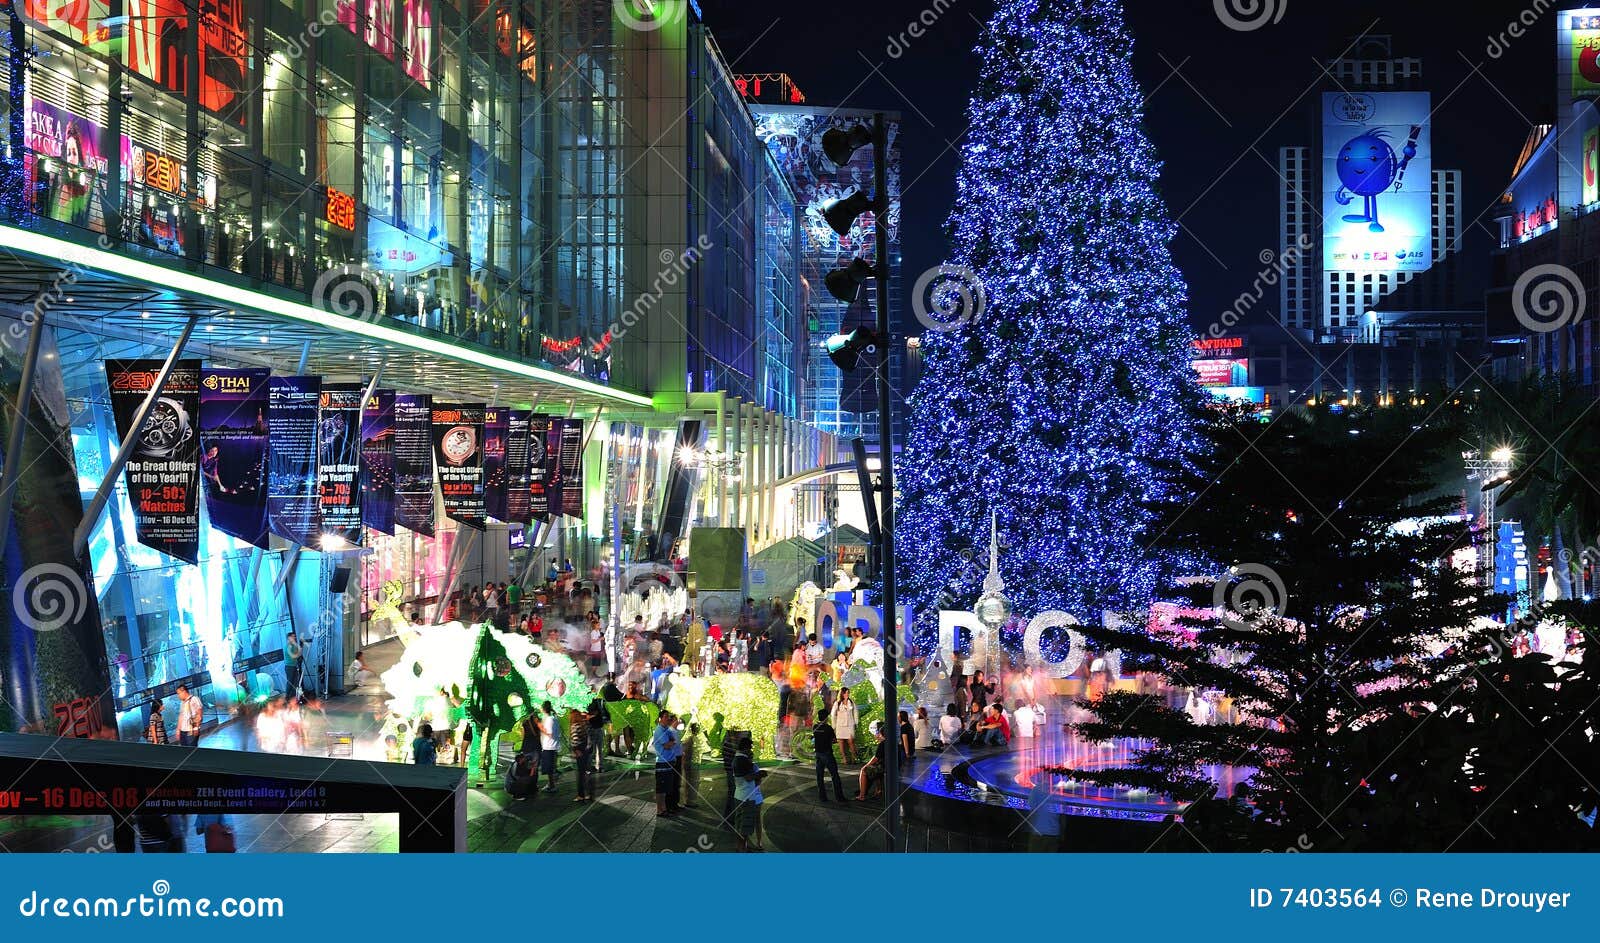 Christmas Celebration At Central World In Bangkok Editorial Stock Image Image Of Christmas Night 7403564